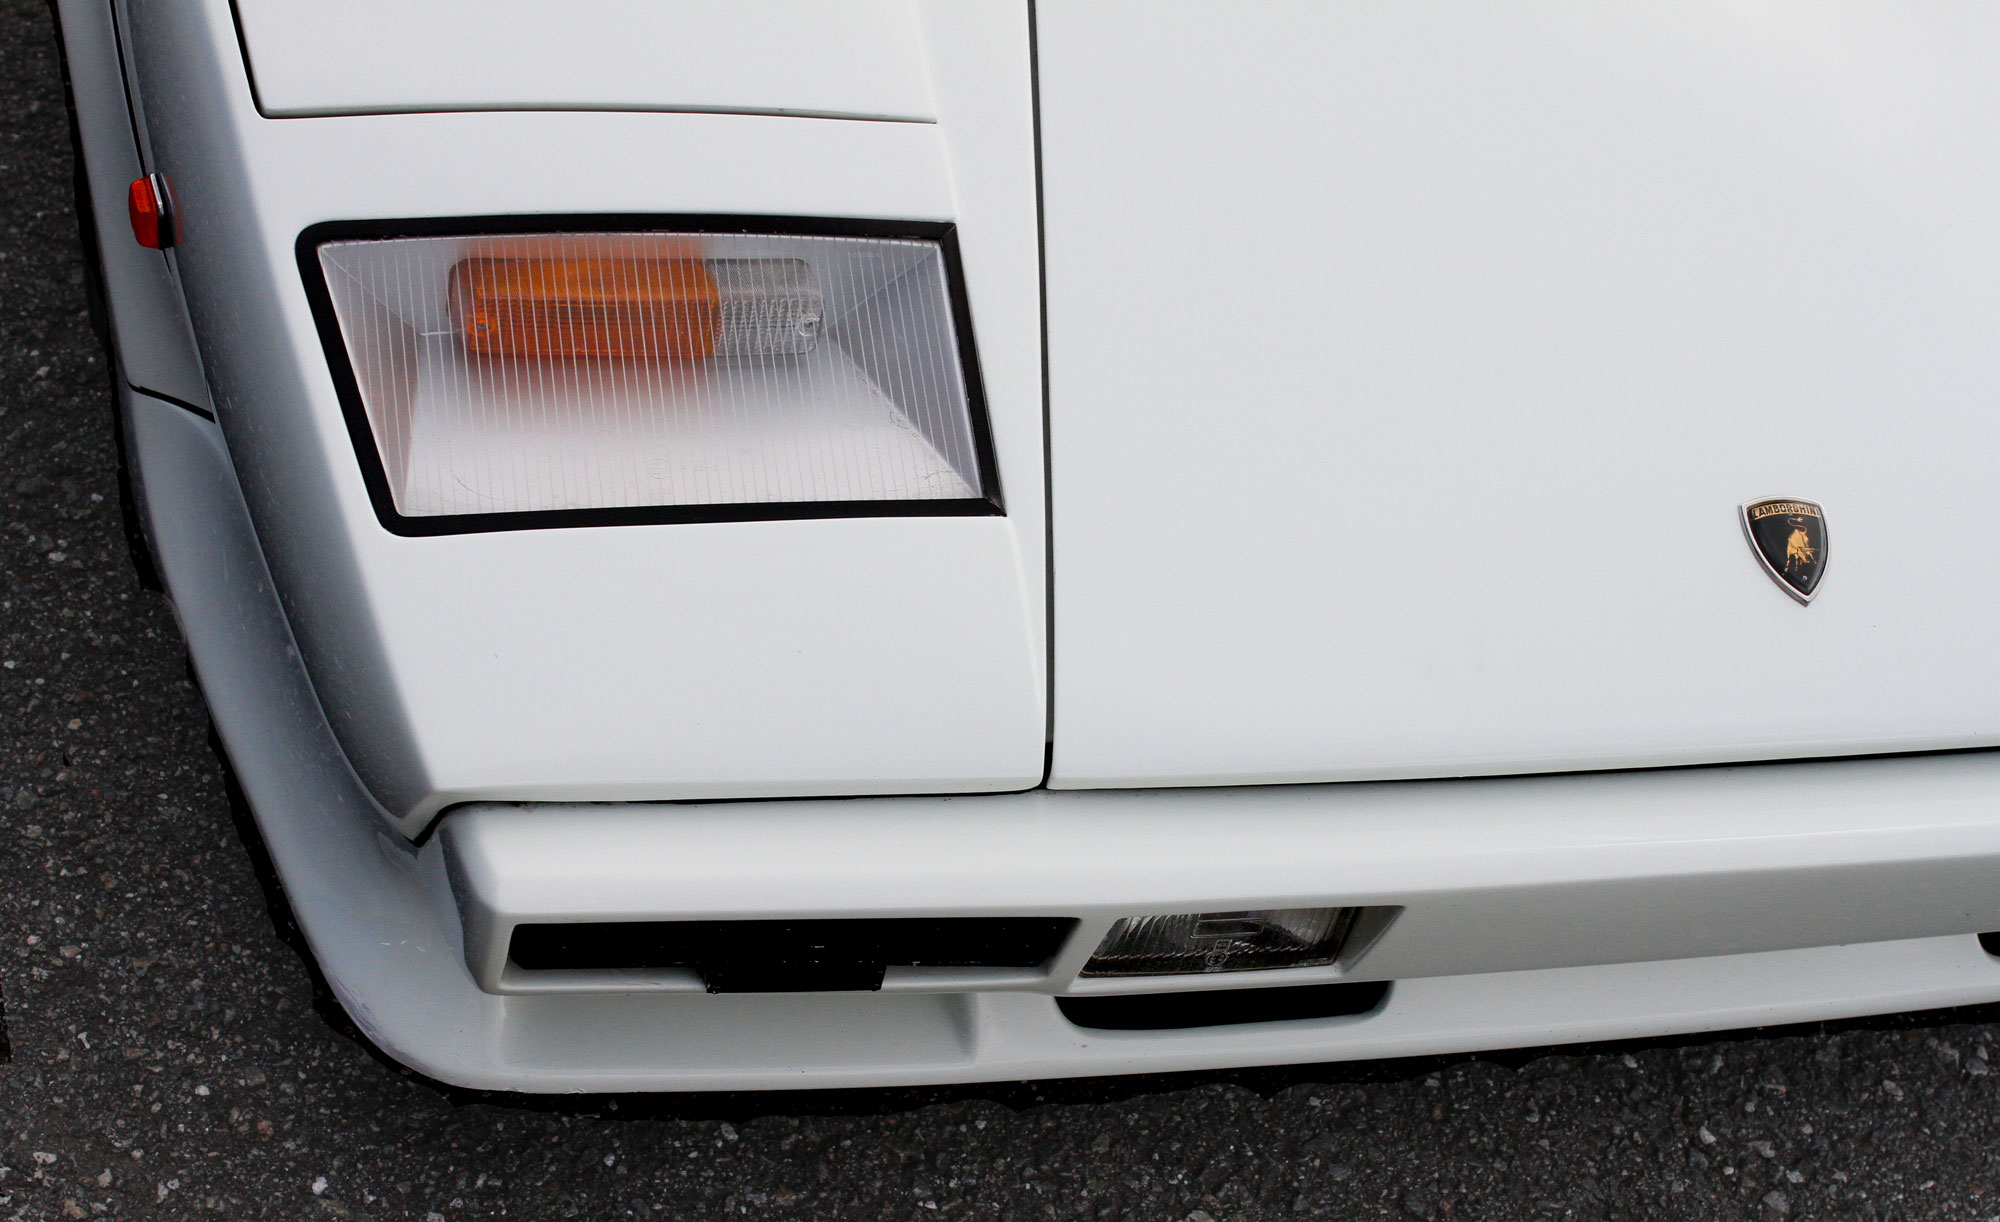 Vit Lamborghini Countach höger framlampa med Lambo emblemet på bagage luckan